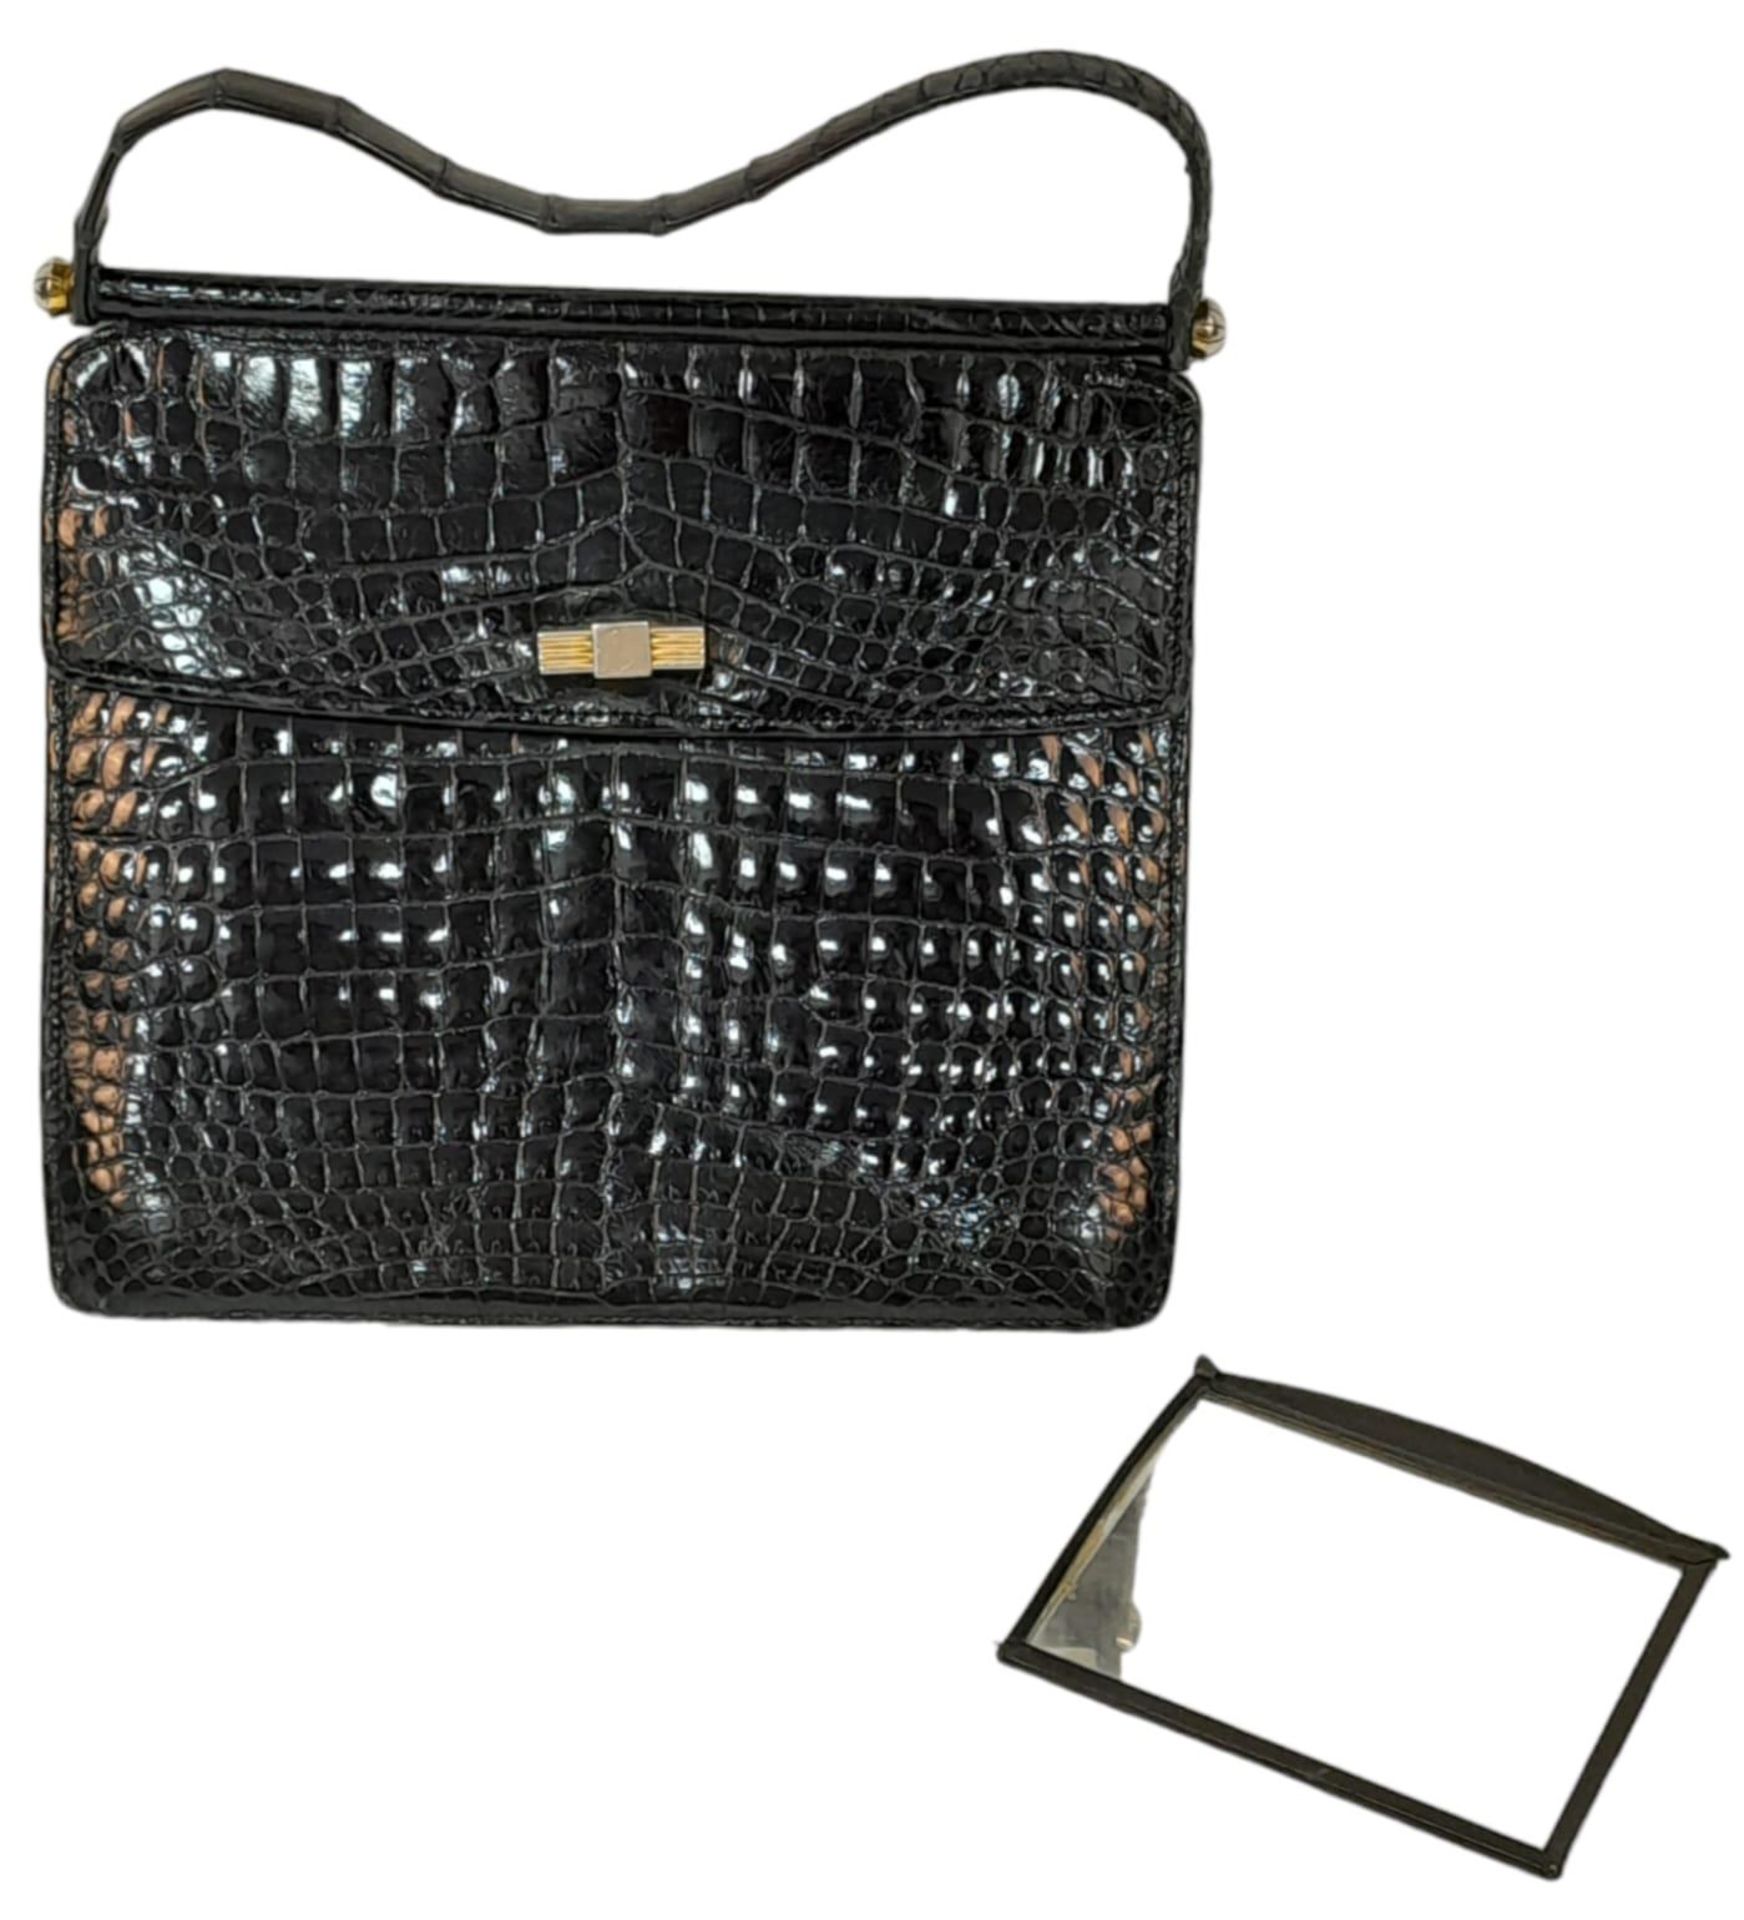 Two Crocodile Leather Hand Bags. Black crocodile bag has gold-toned hardware, a single strap and - Bild 4 aus 6